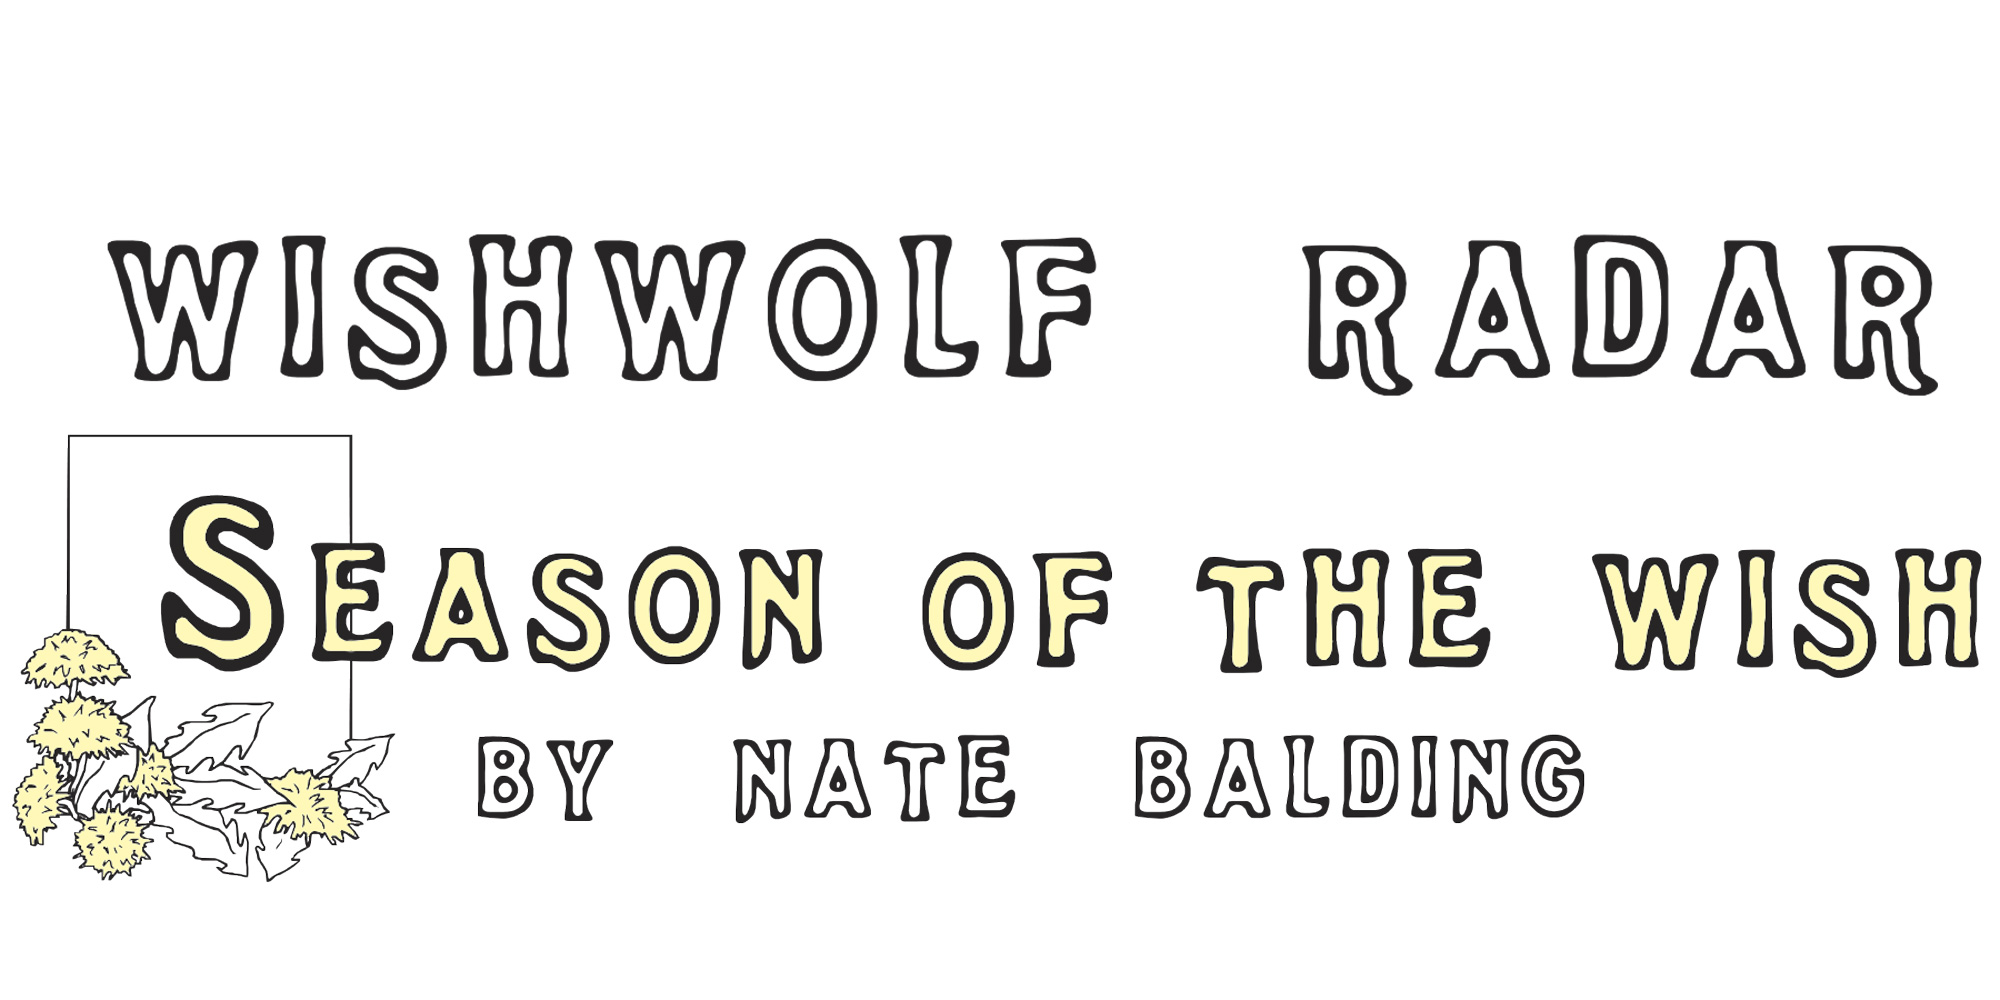 Werewolf Radar: Season of the Wish by Nate Balding